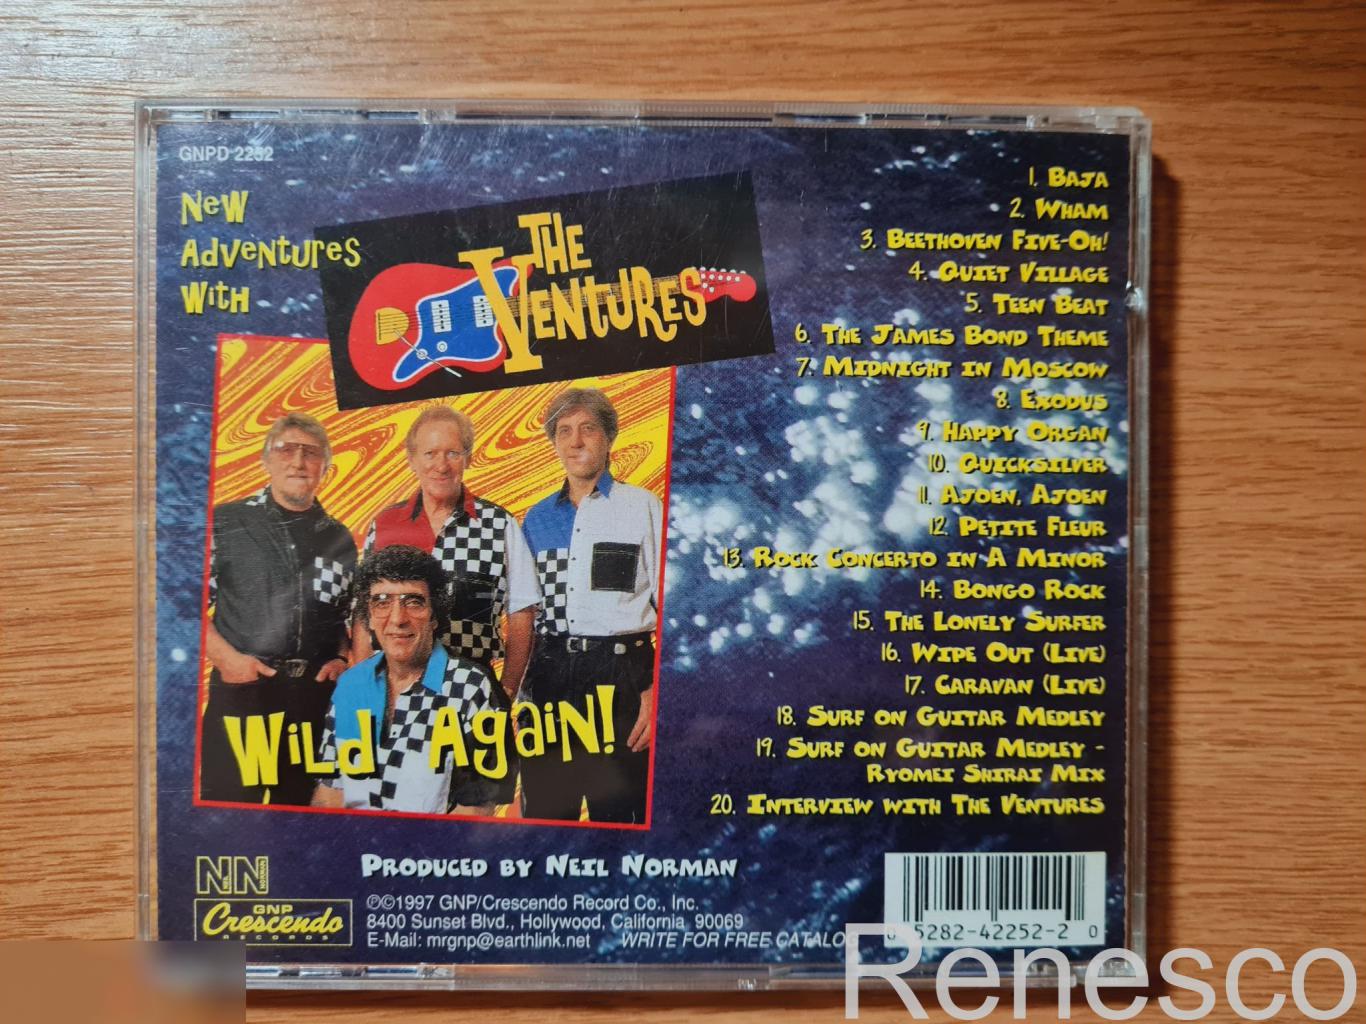 The Ventures – Wild Again! (USA) (1997) 1